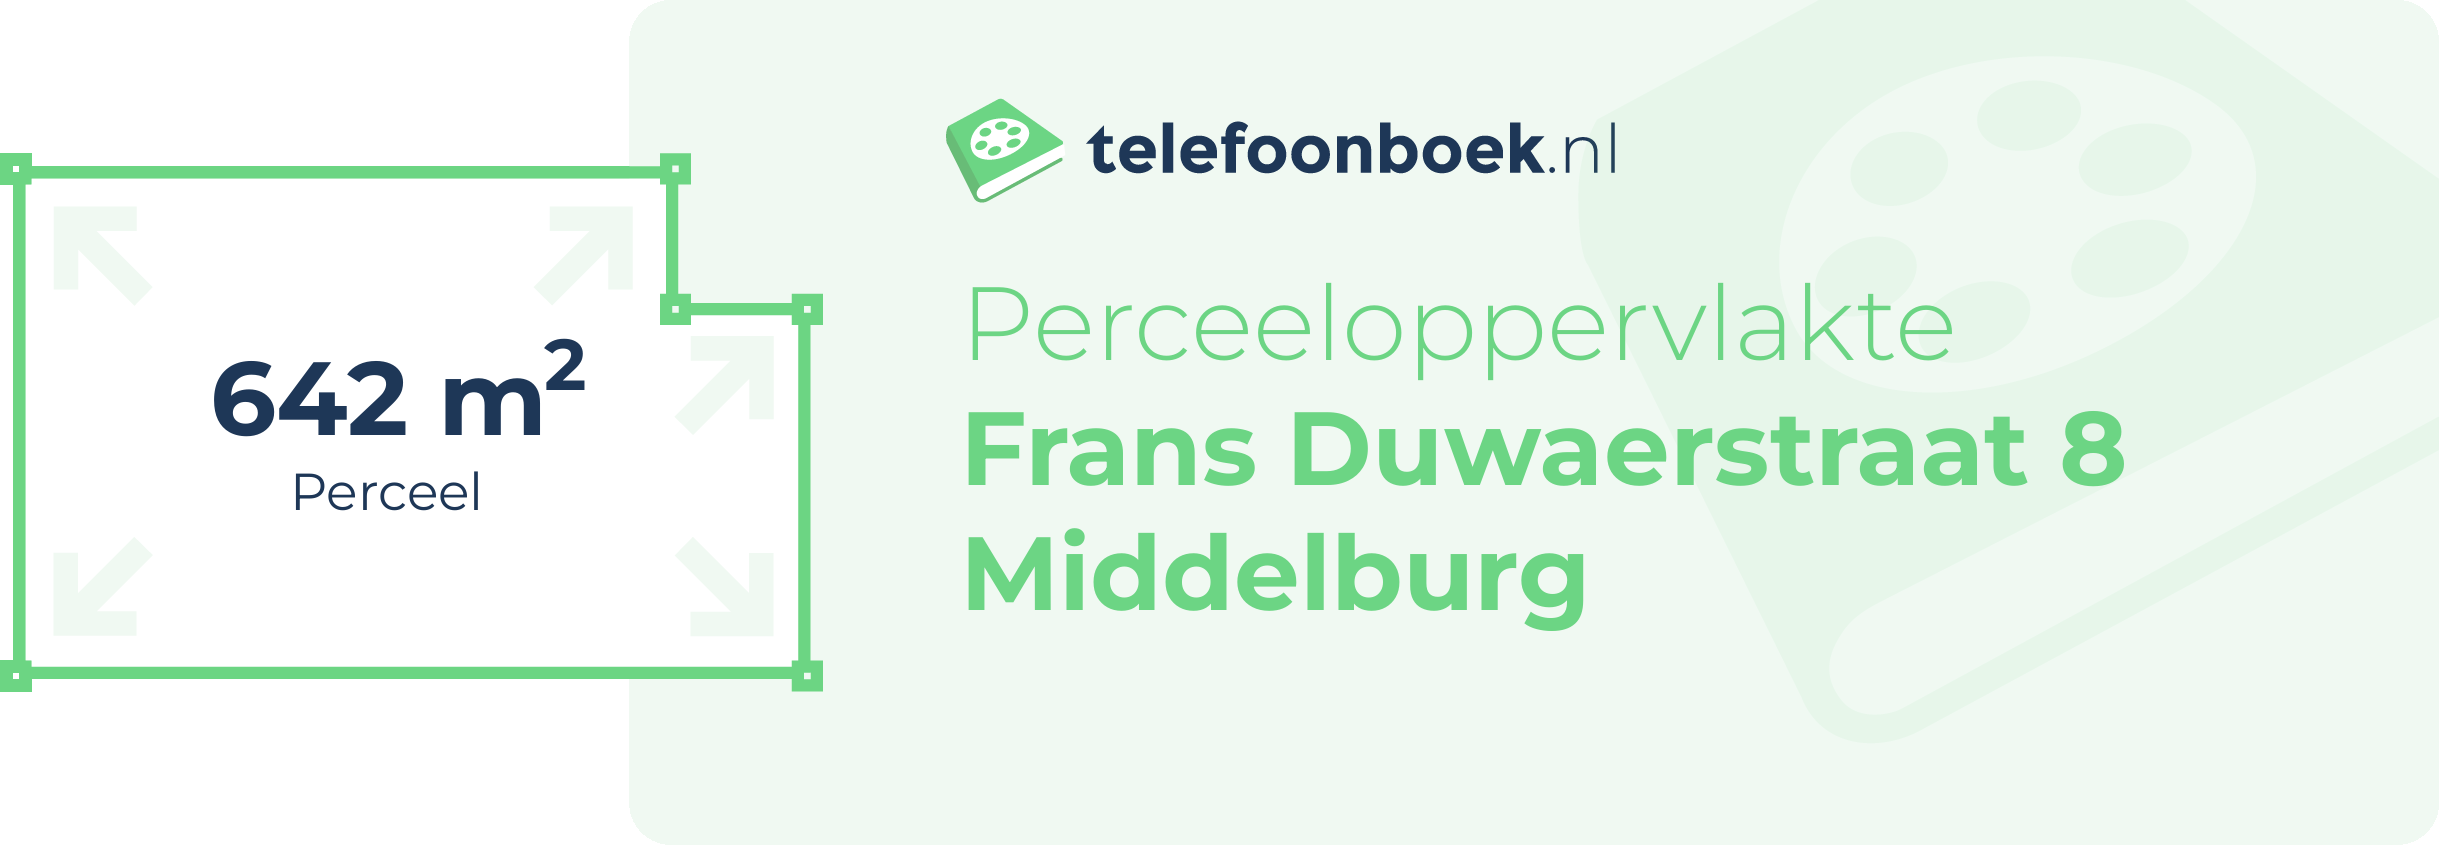 Perceeloppervlakte Frans Duwaerstraat 8 Middelburg